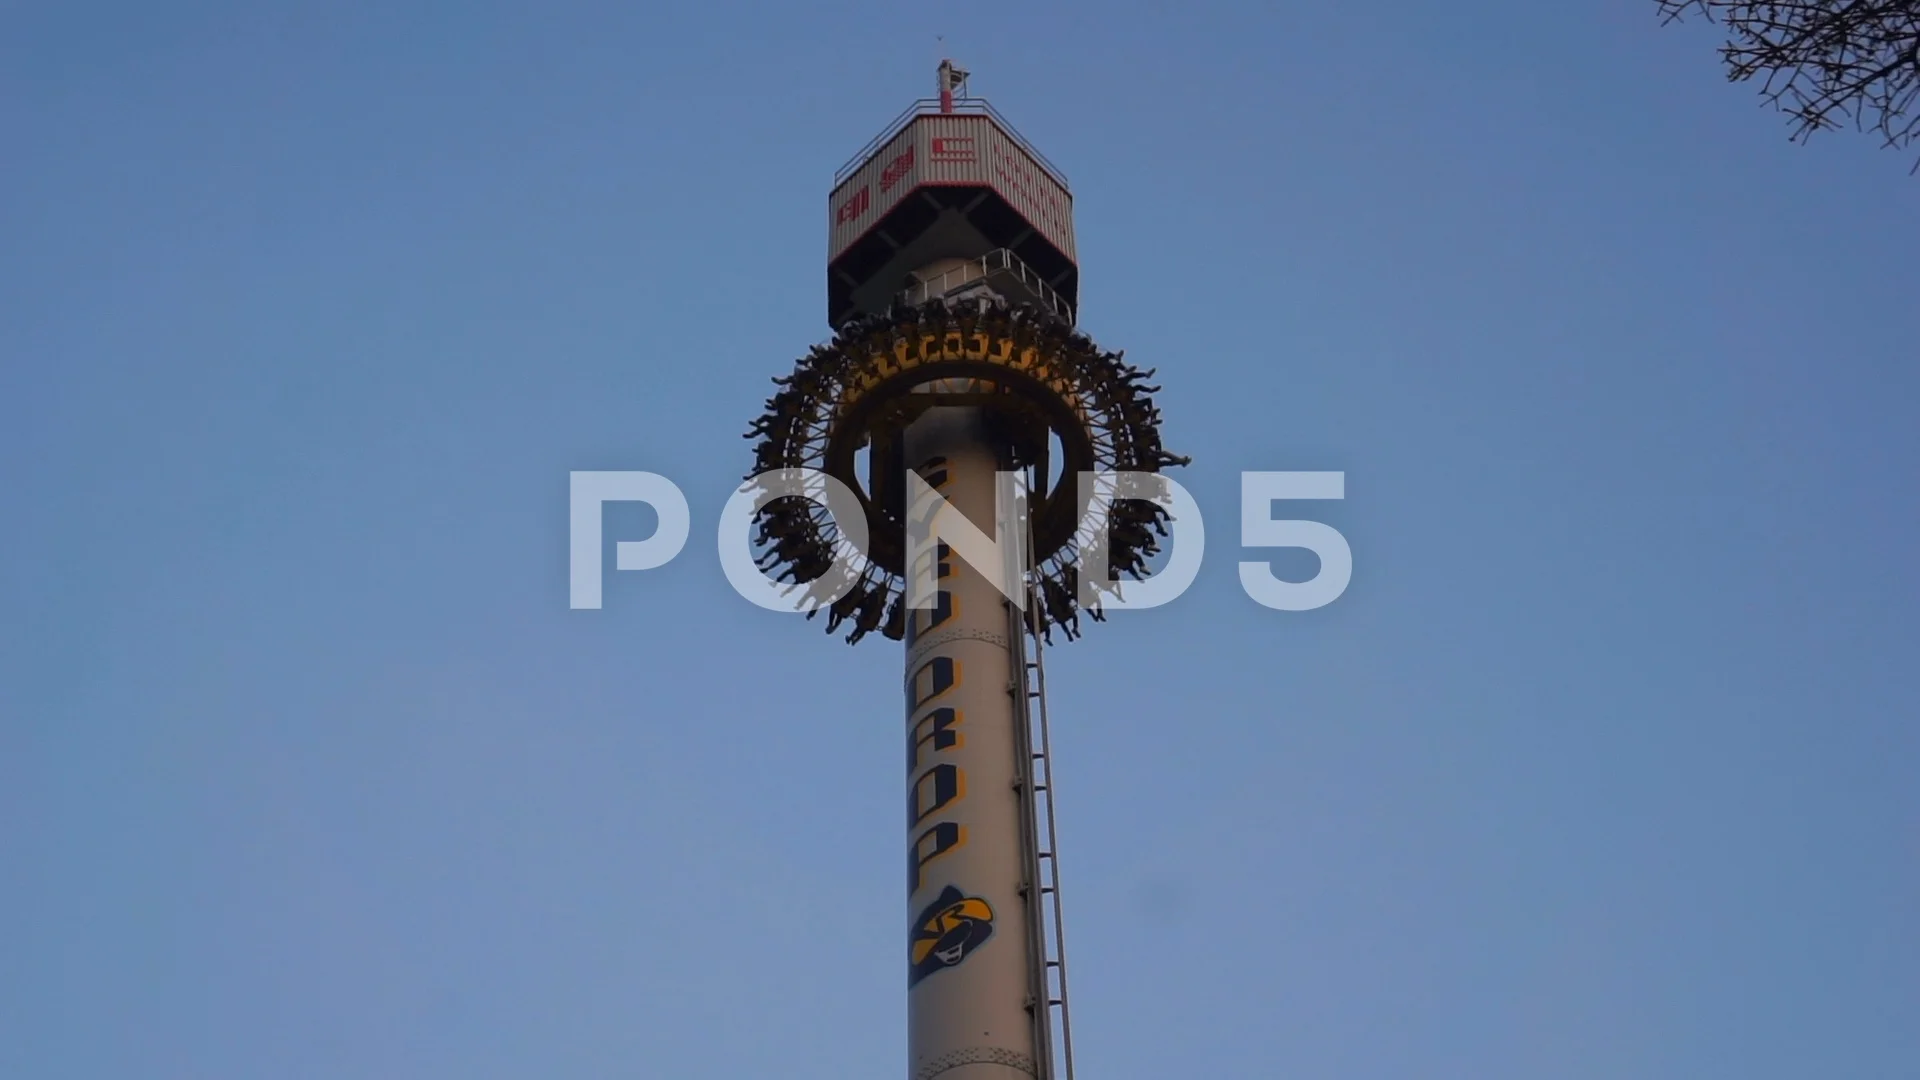 https://images.pond5.com/extreme-drop-ride-gyro-drop-footage-106908293_prevstill.jpeg